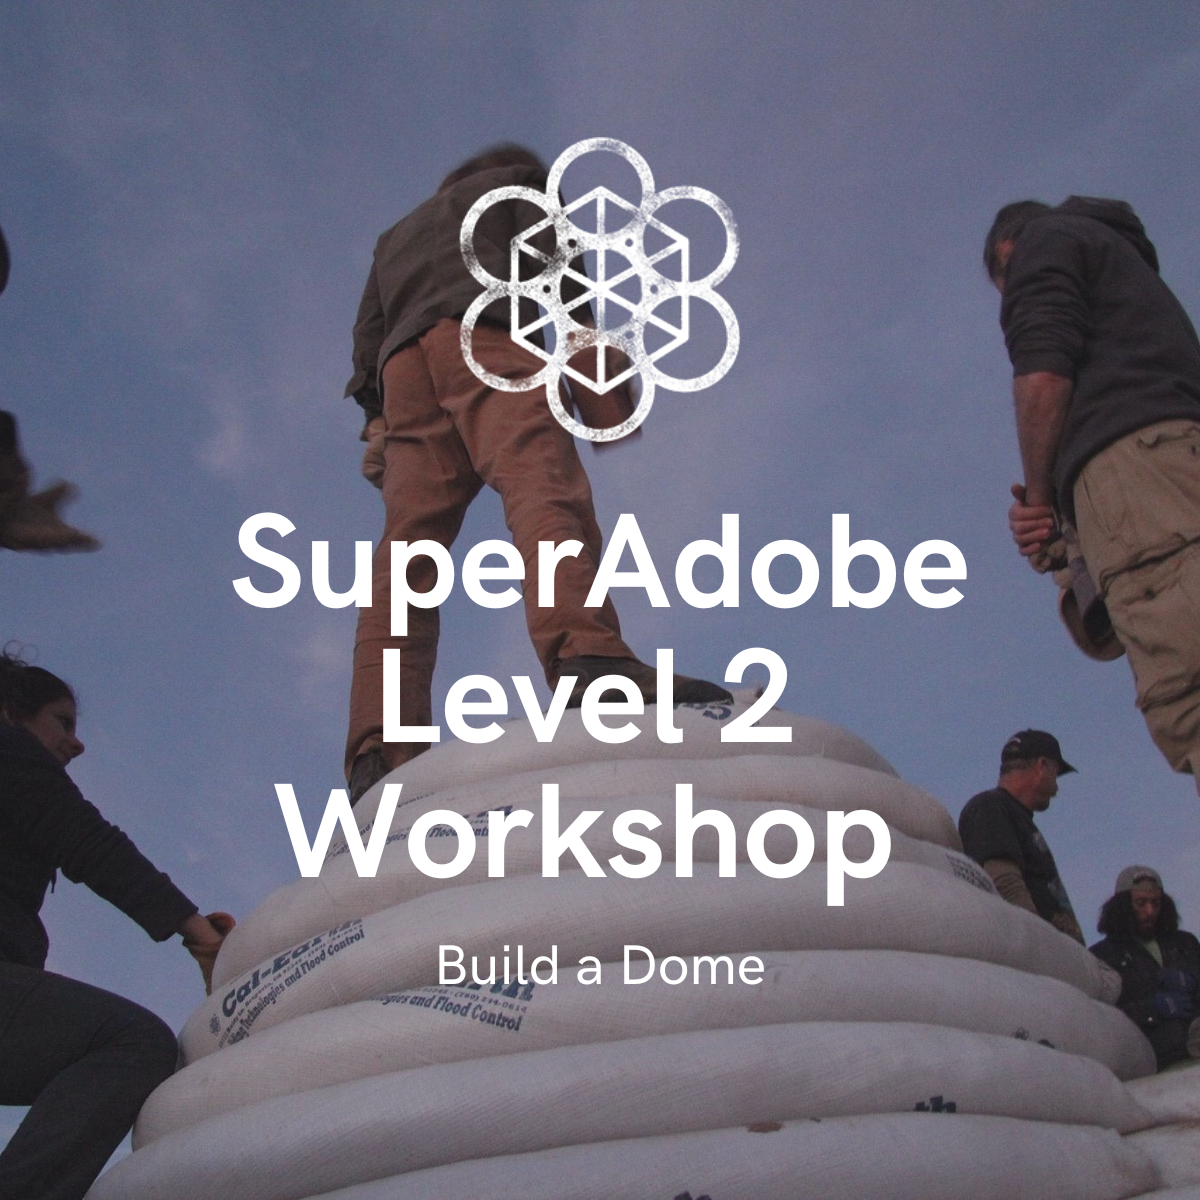 SuperAdobe Level 2 Workshop: Build a Dome